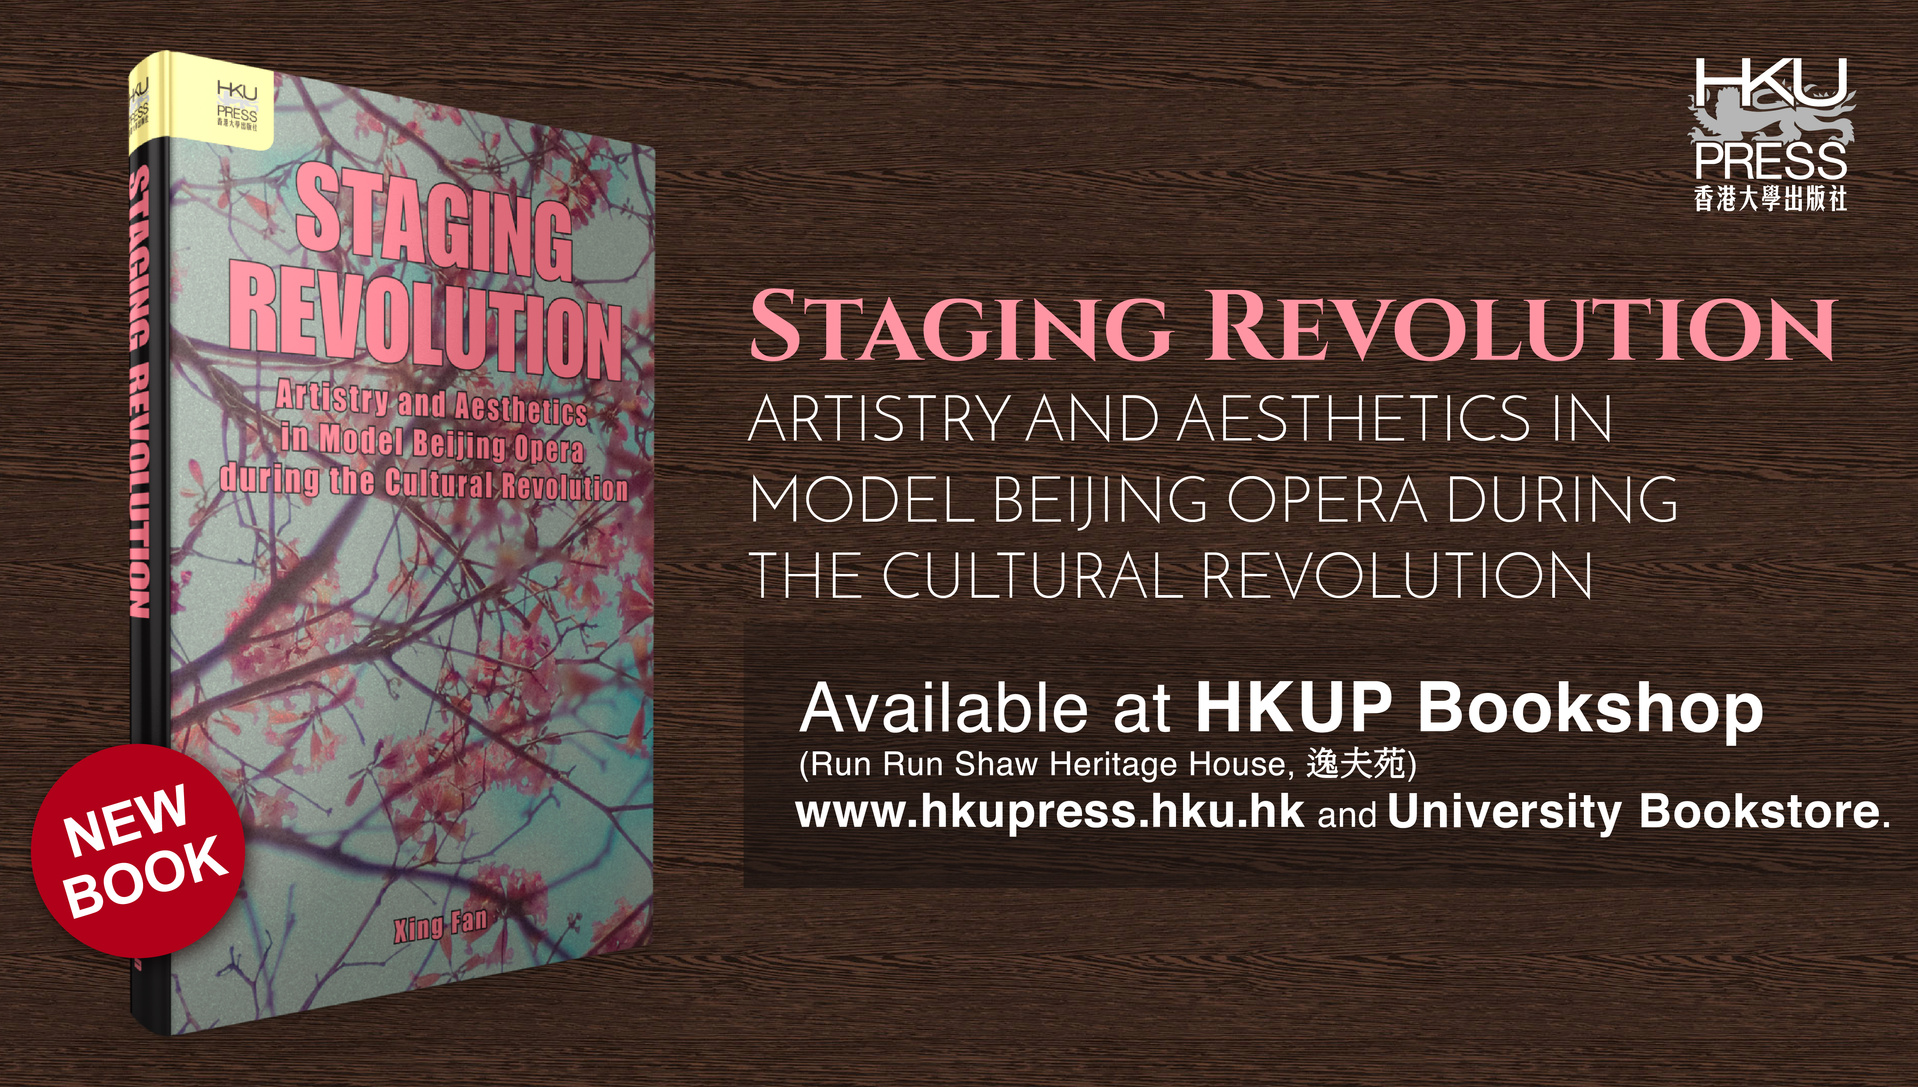 HKU Press - New Book Release